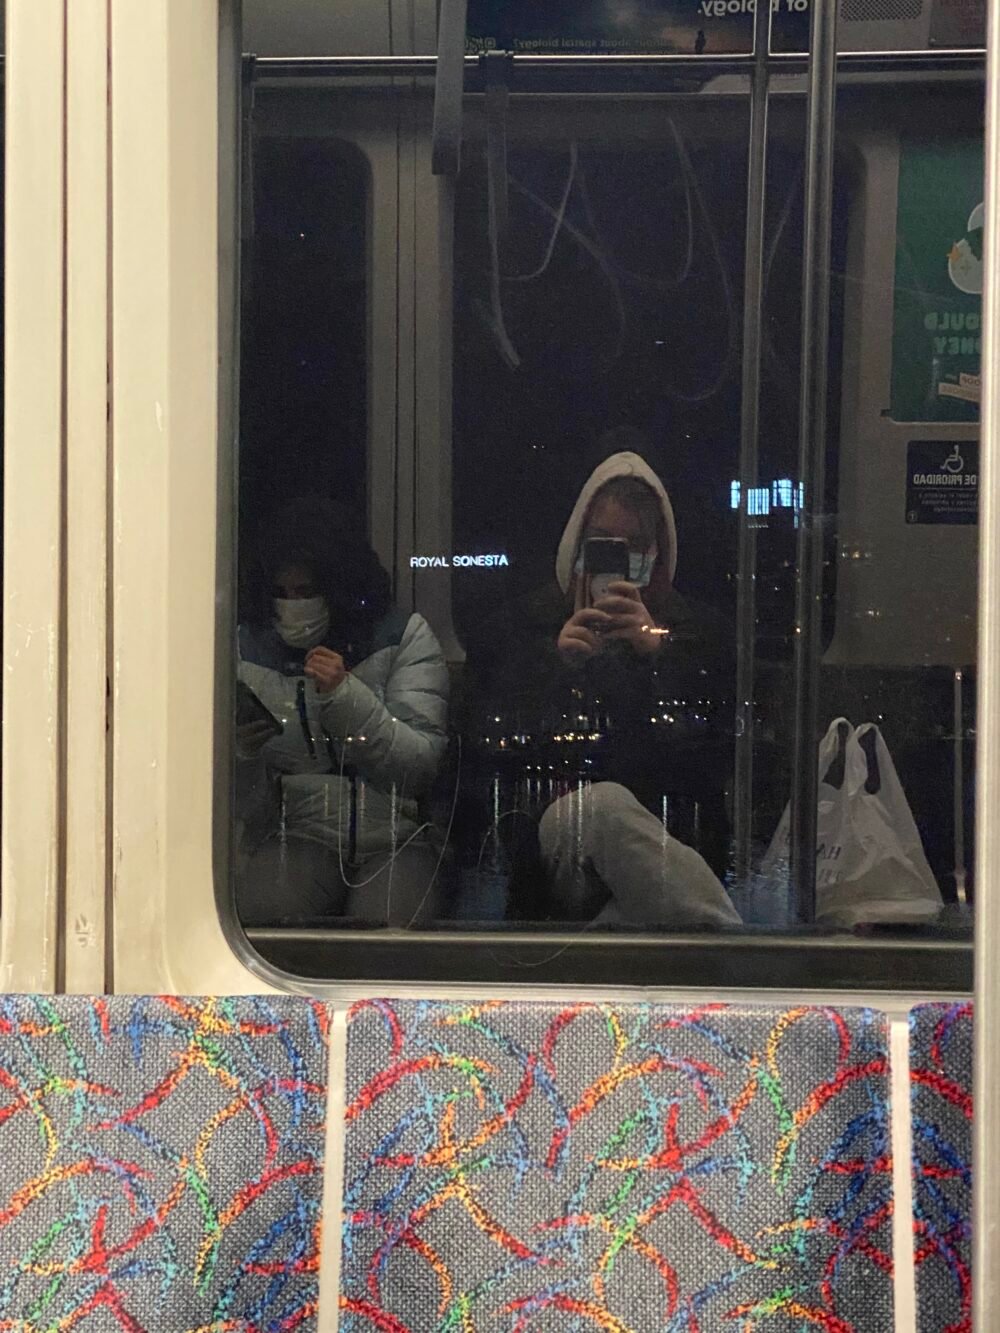 mirror selfie in subway car window